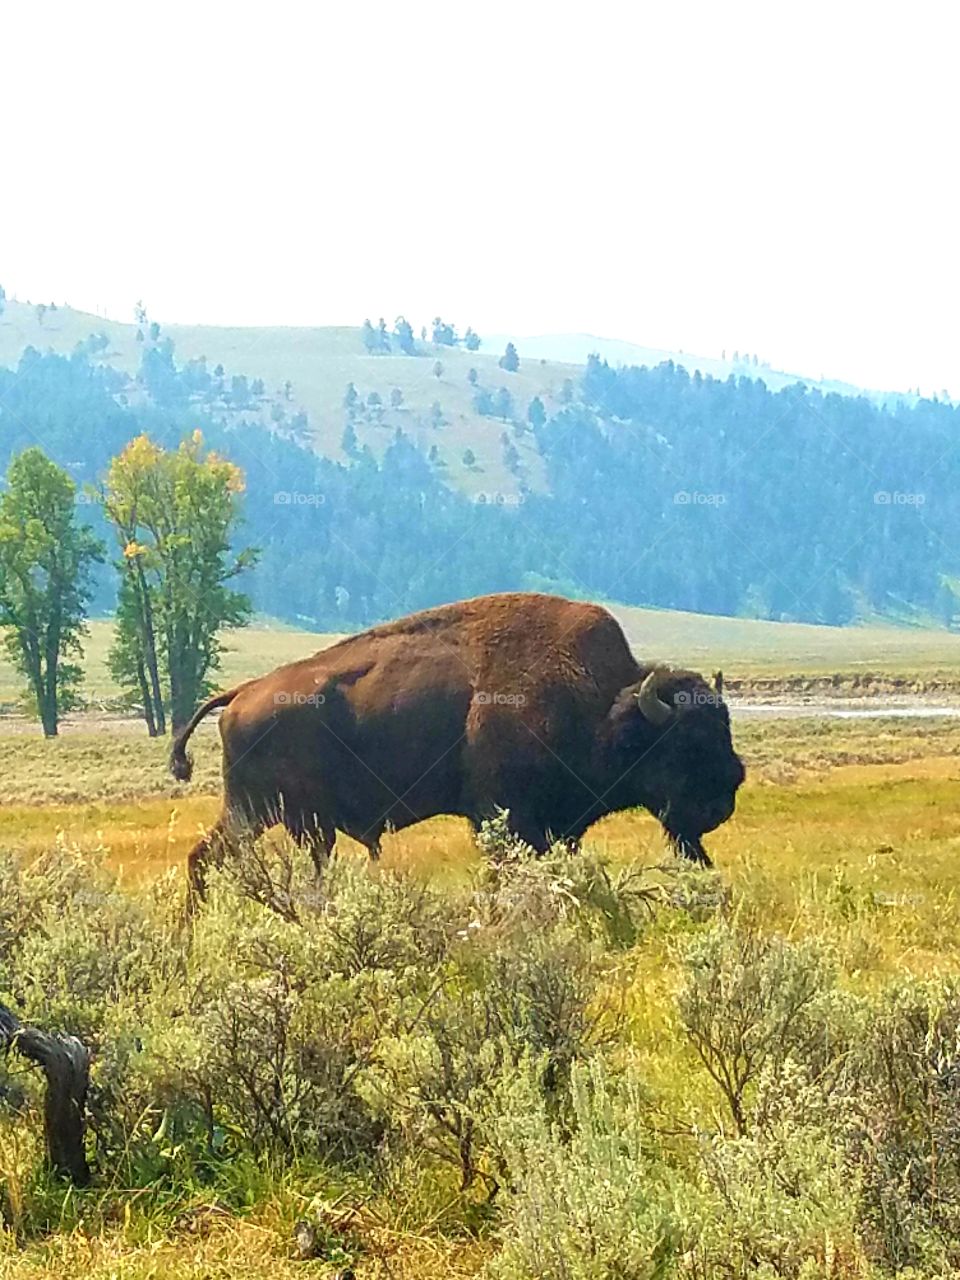 True natives of Yellowstone